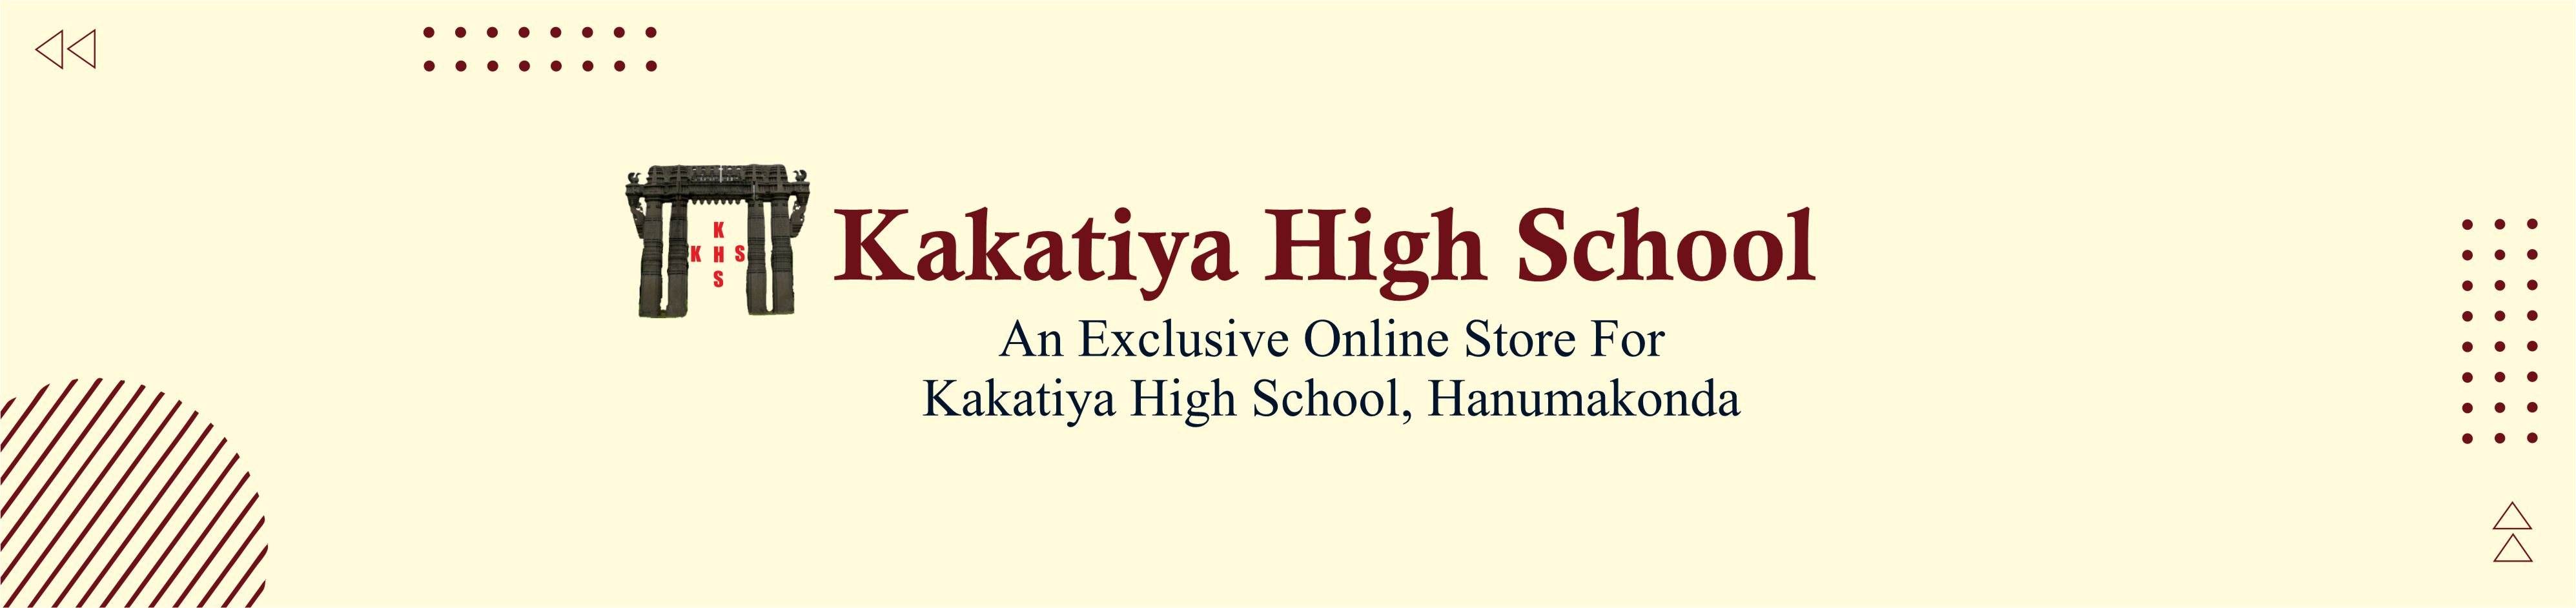 KakatiyaSchoolBanner